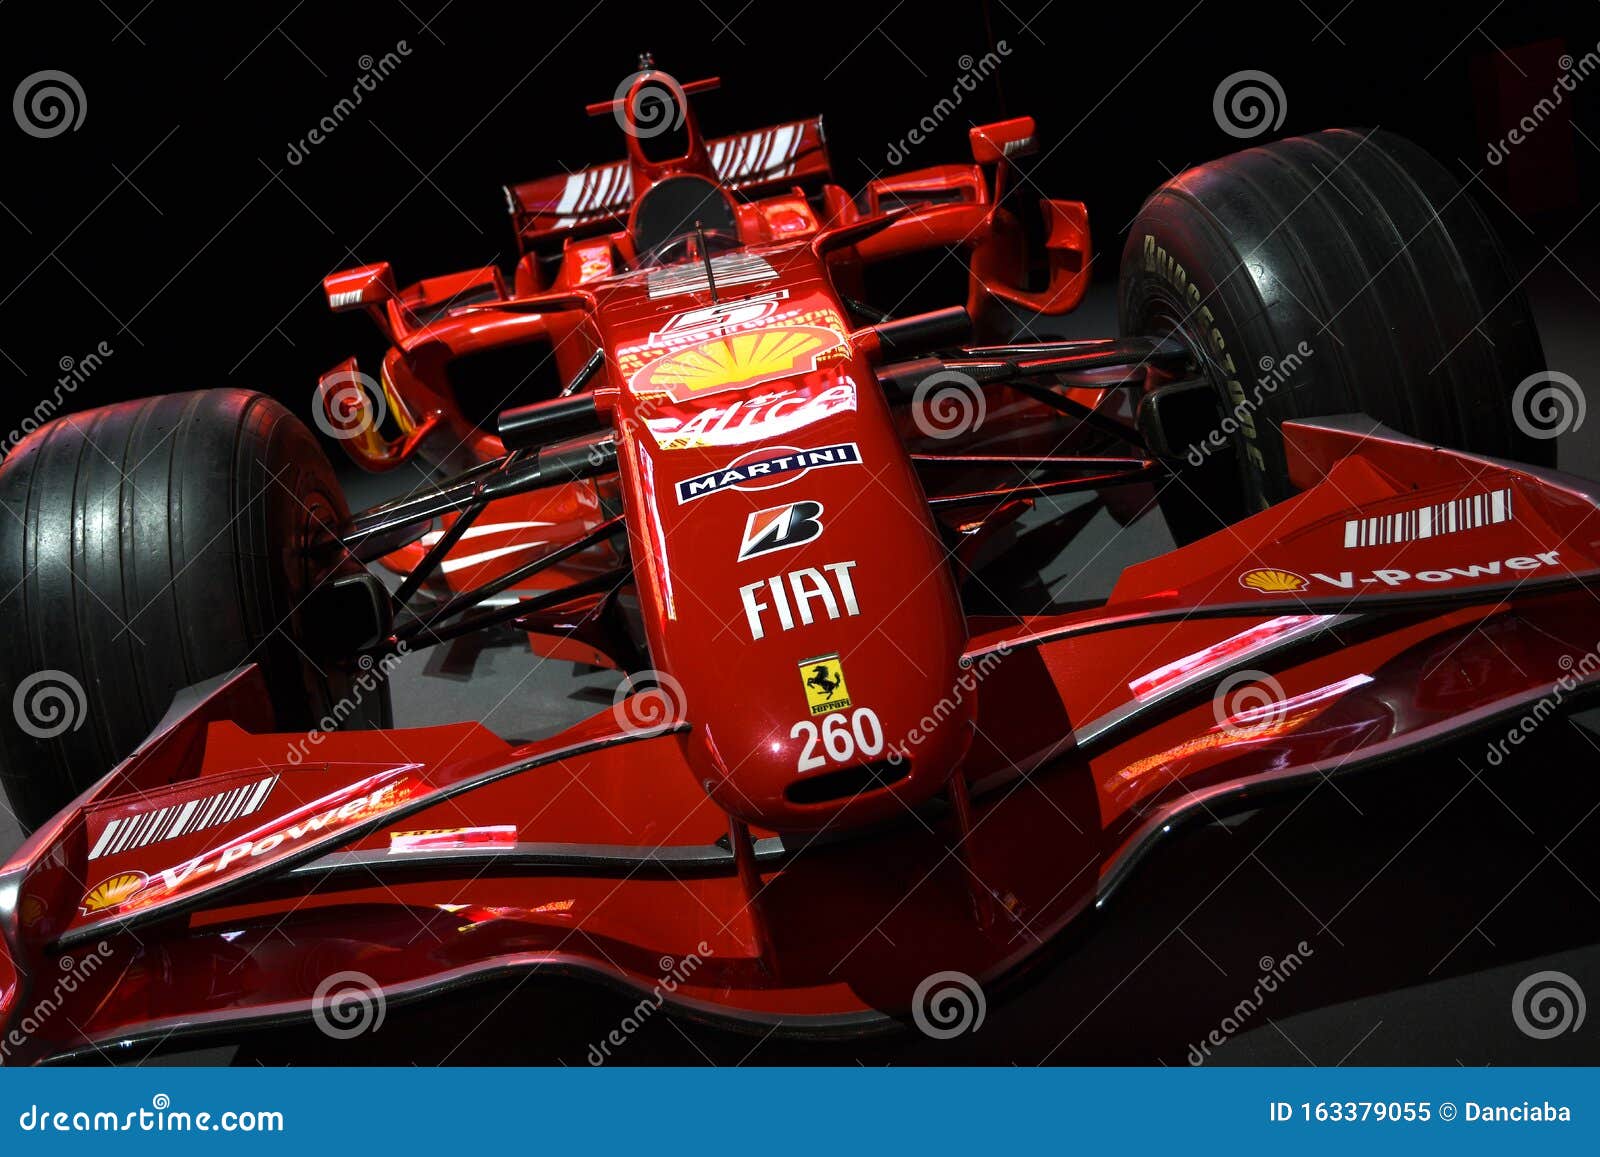 Mugello Circuit, 25 October 2019: Ferrari F1 Model F2007 Year 2007 World Champion Kimi Raikkonen Display Editorial Image - of formula, mugello: 163379055